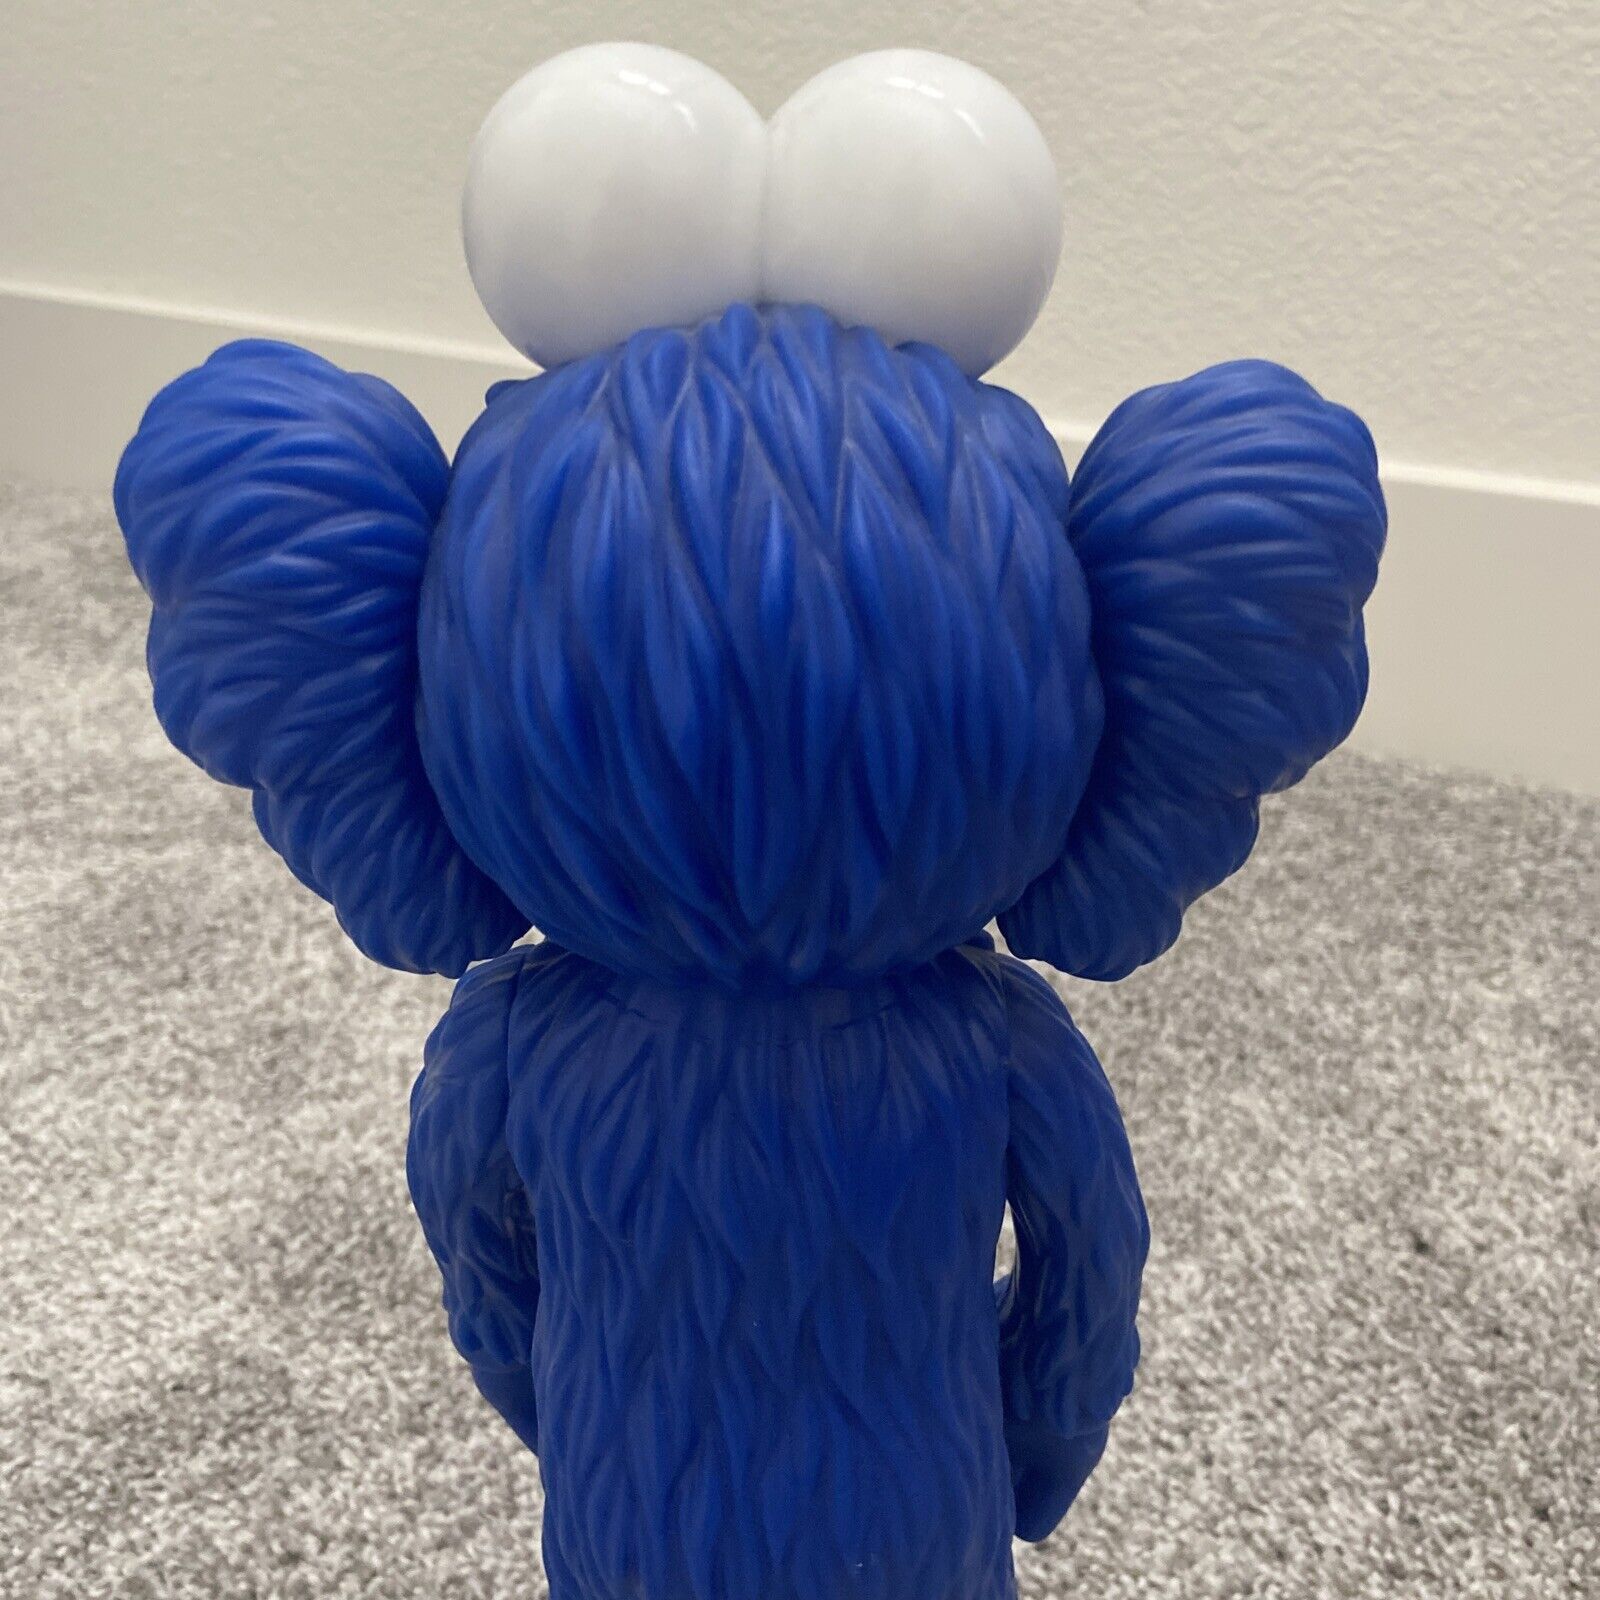 Kaws Plush Toy Stuffed BFF Dissected Companion Art Toys Figurine Plush Doll Blue / 40cm